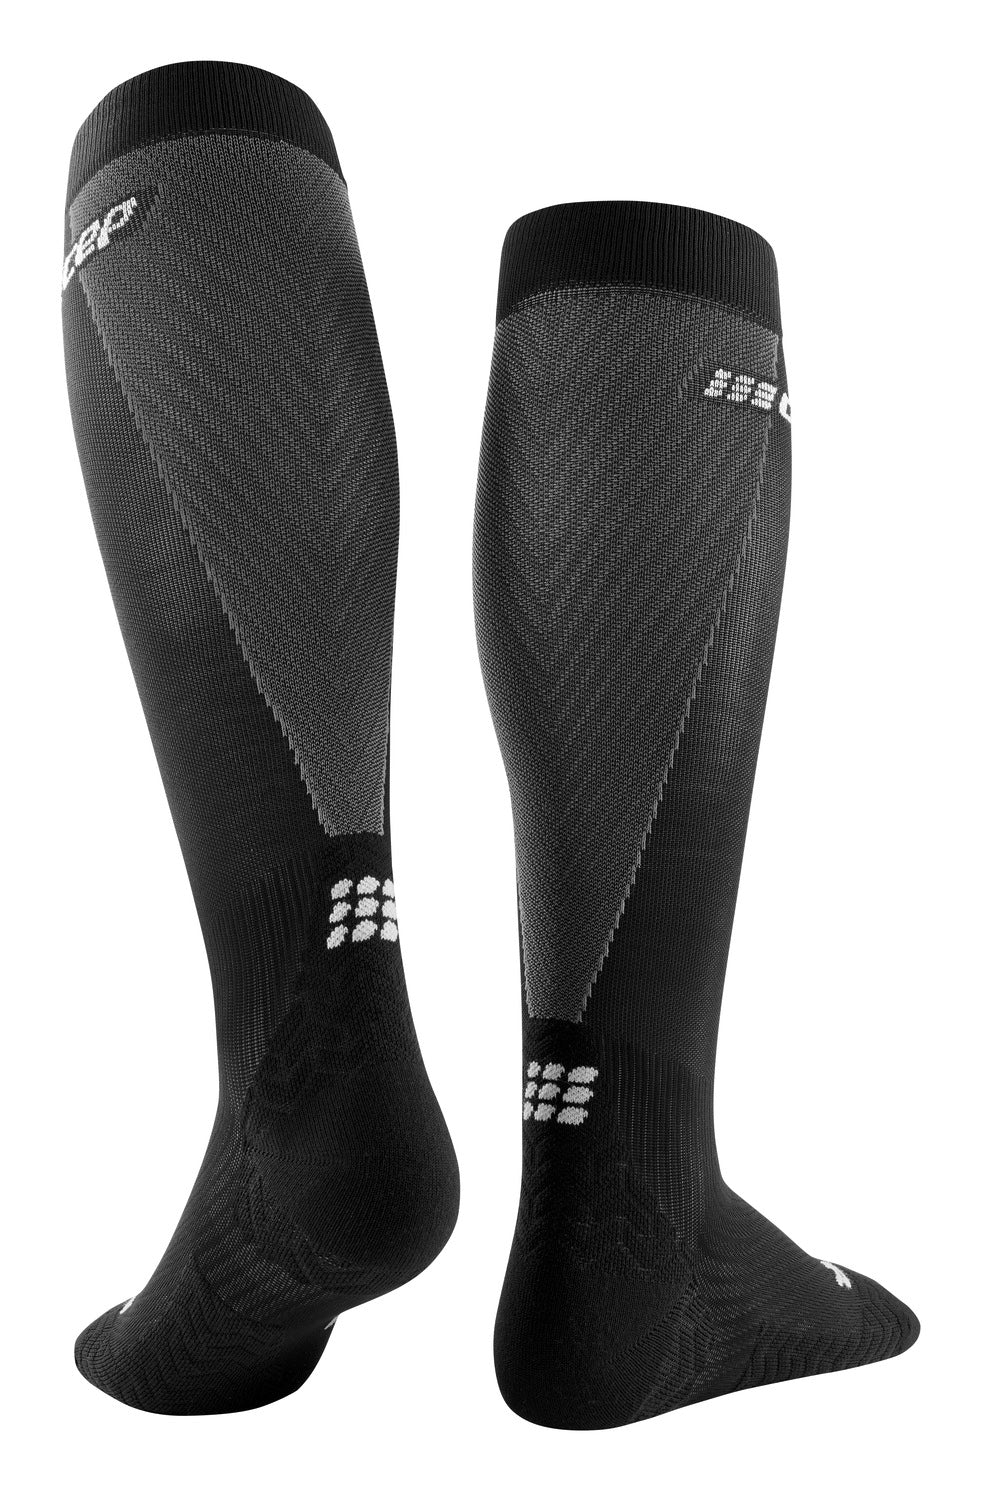 NEW - Men Ultralight 20-30mmHg Knee High Compression Socks